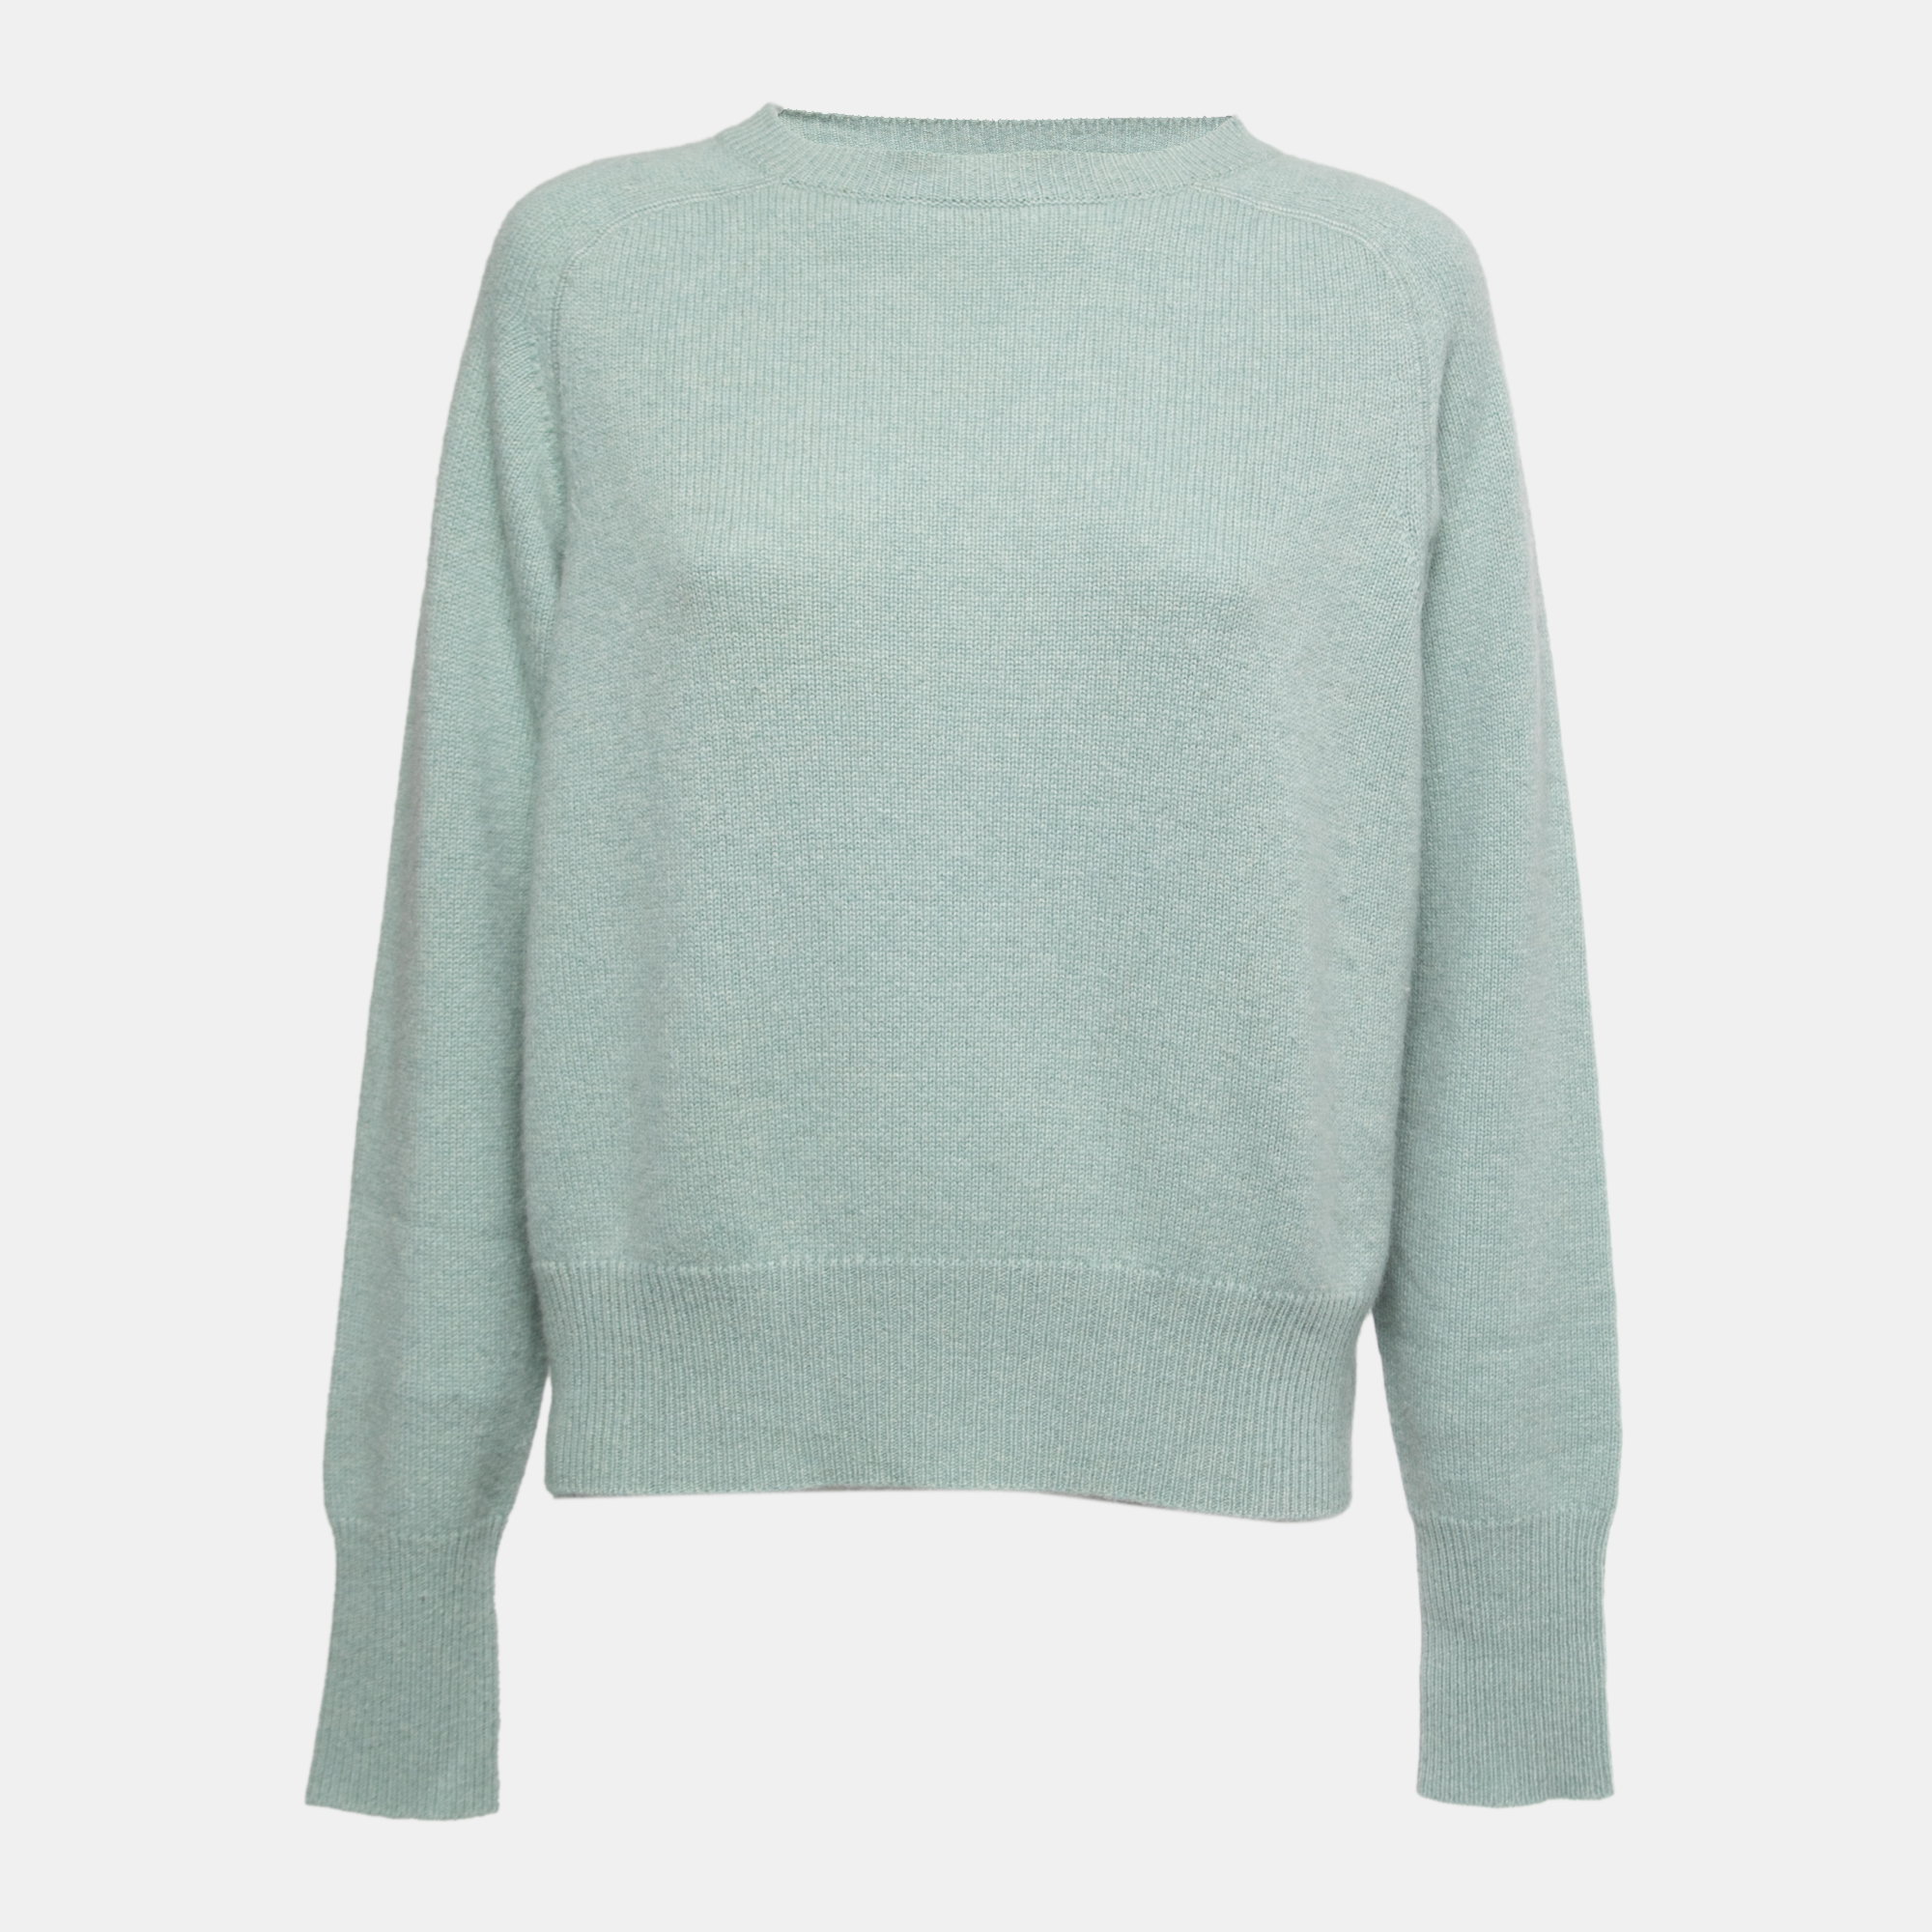 360 cashmere sage green cashmere knit sweater m